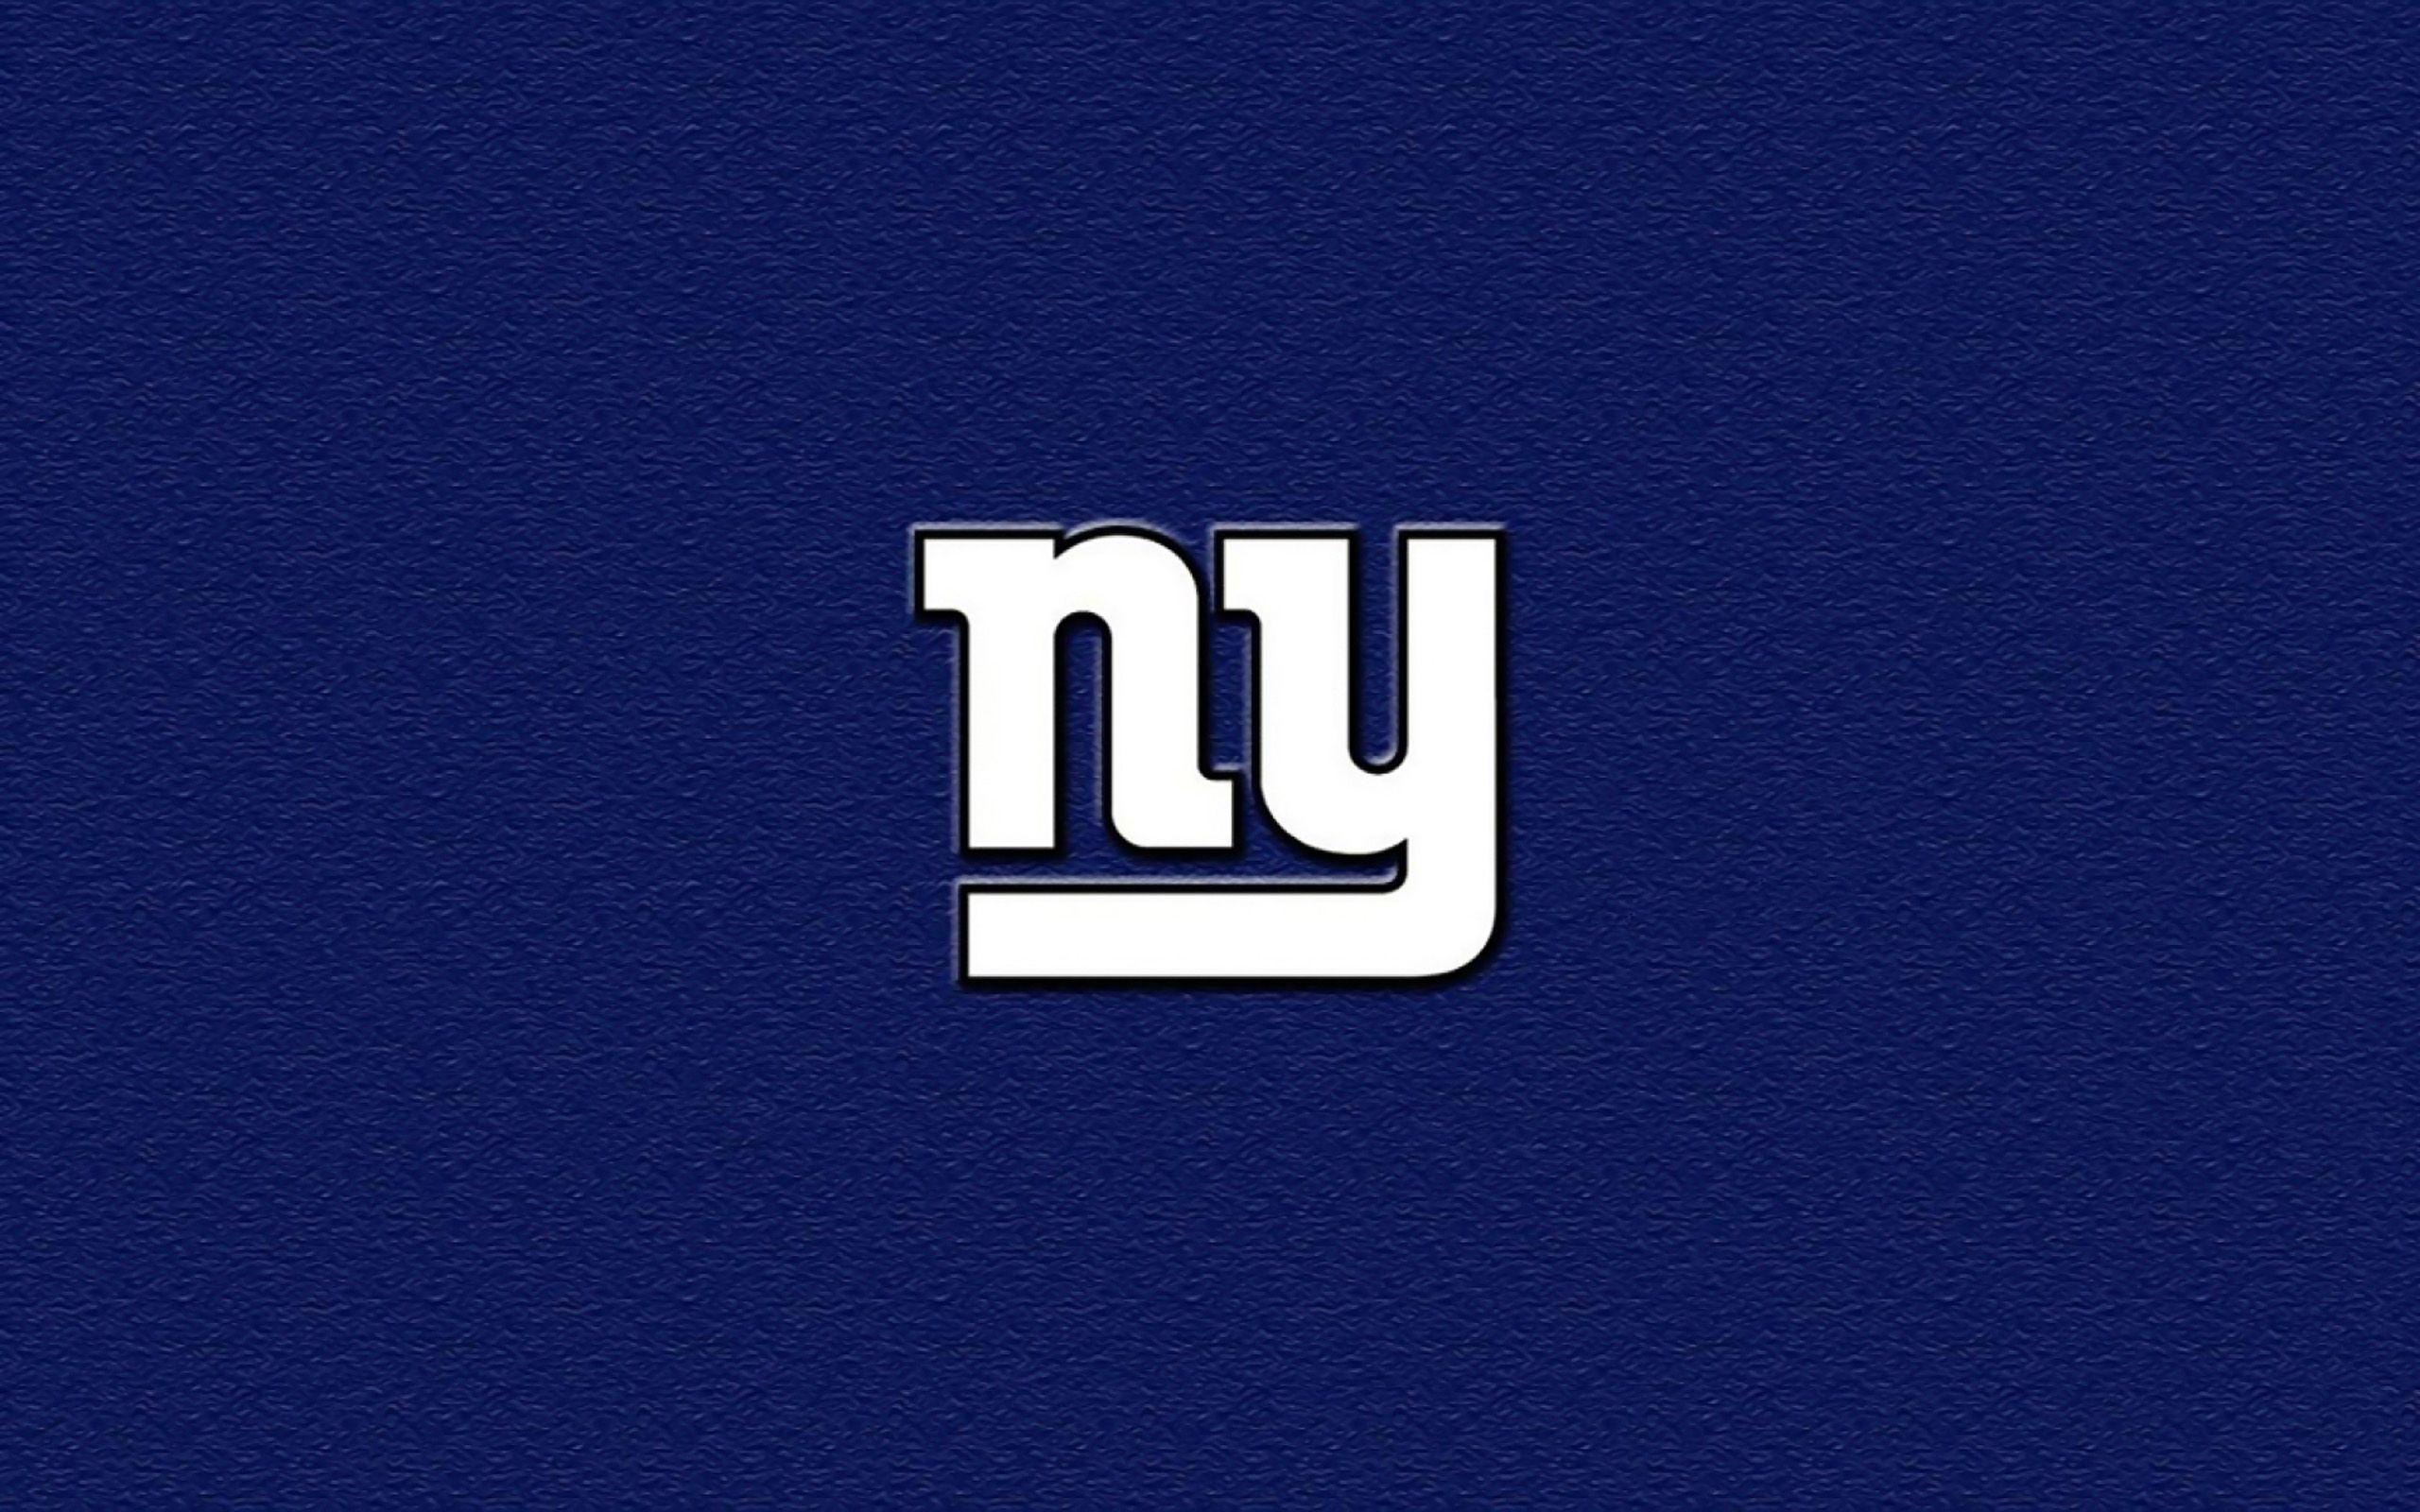 New York Giants Full HD Wallpaper and Backgroundx1600